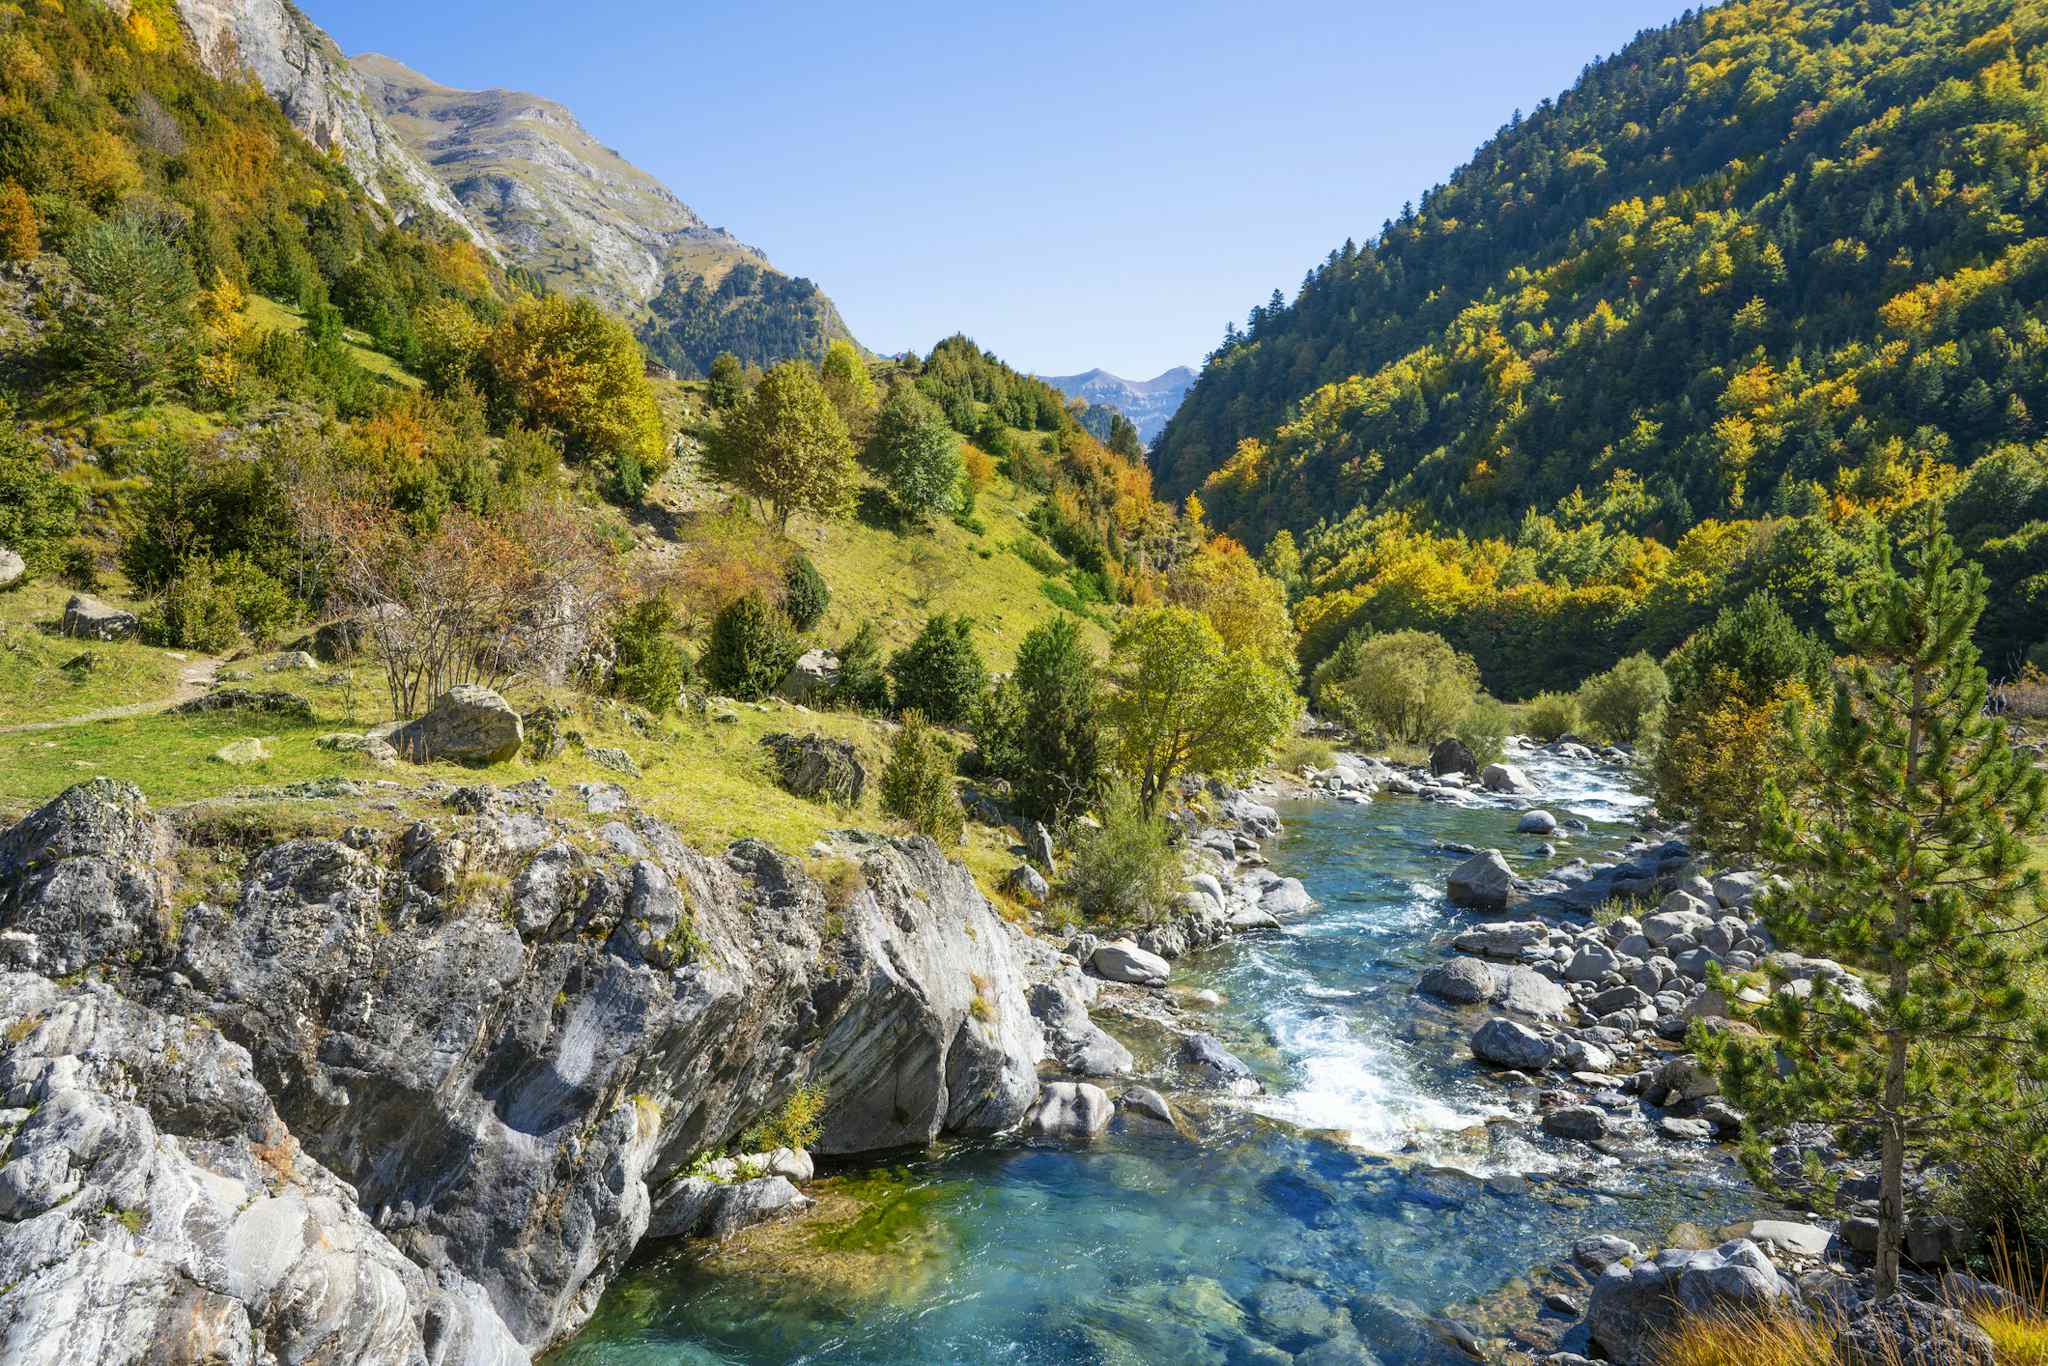 Rio Ara River, Ordesa Valley, Pyrenees. Photo: GettyImages-1350721554

